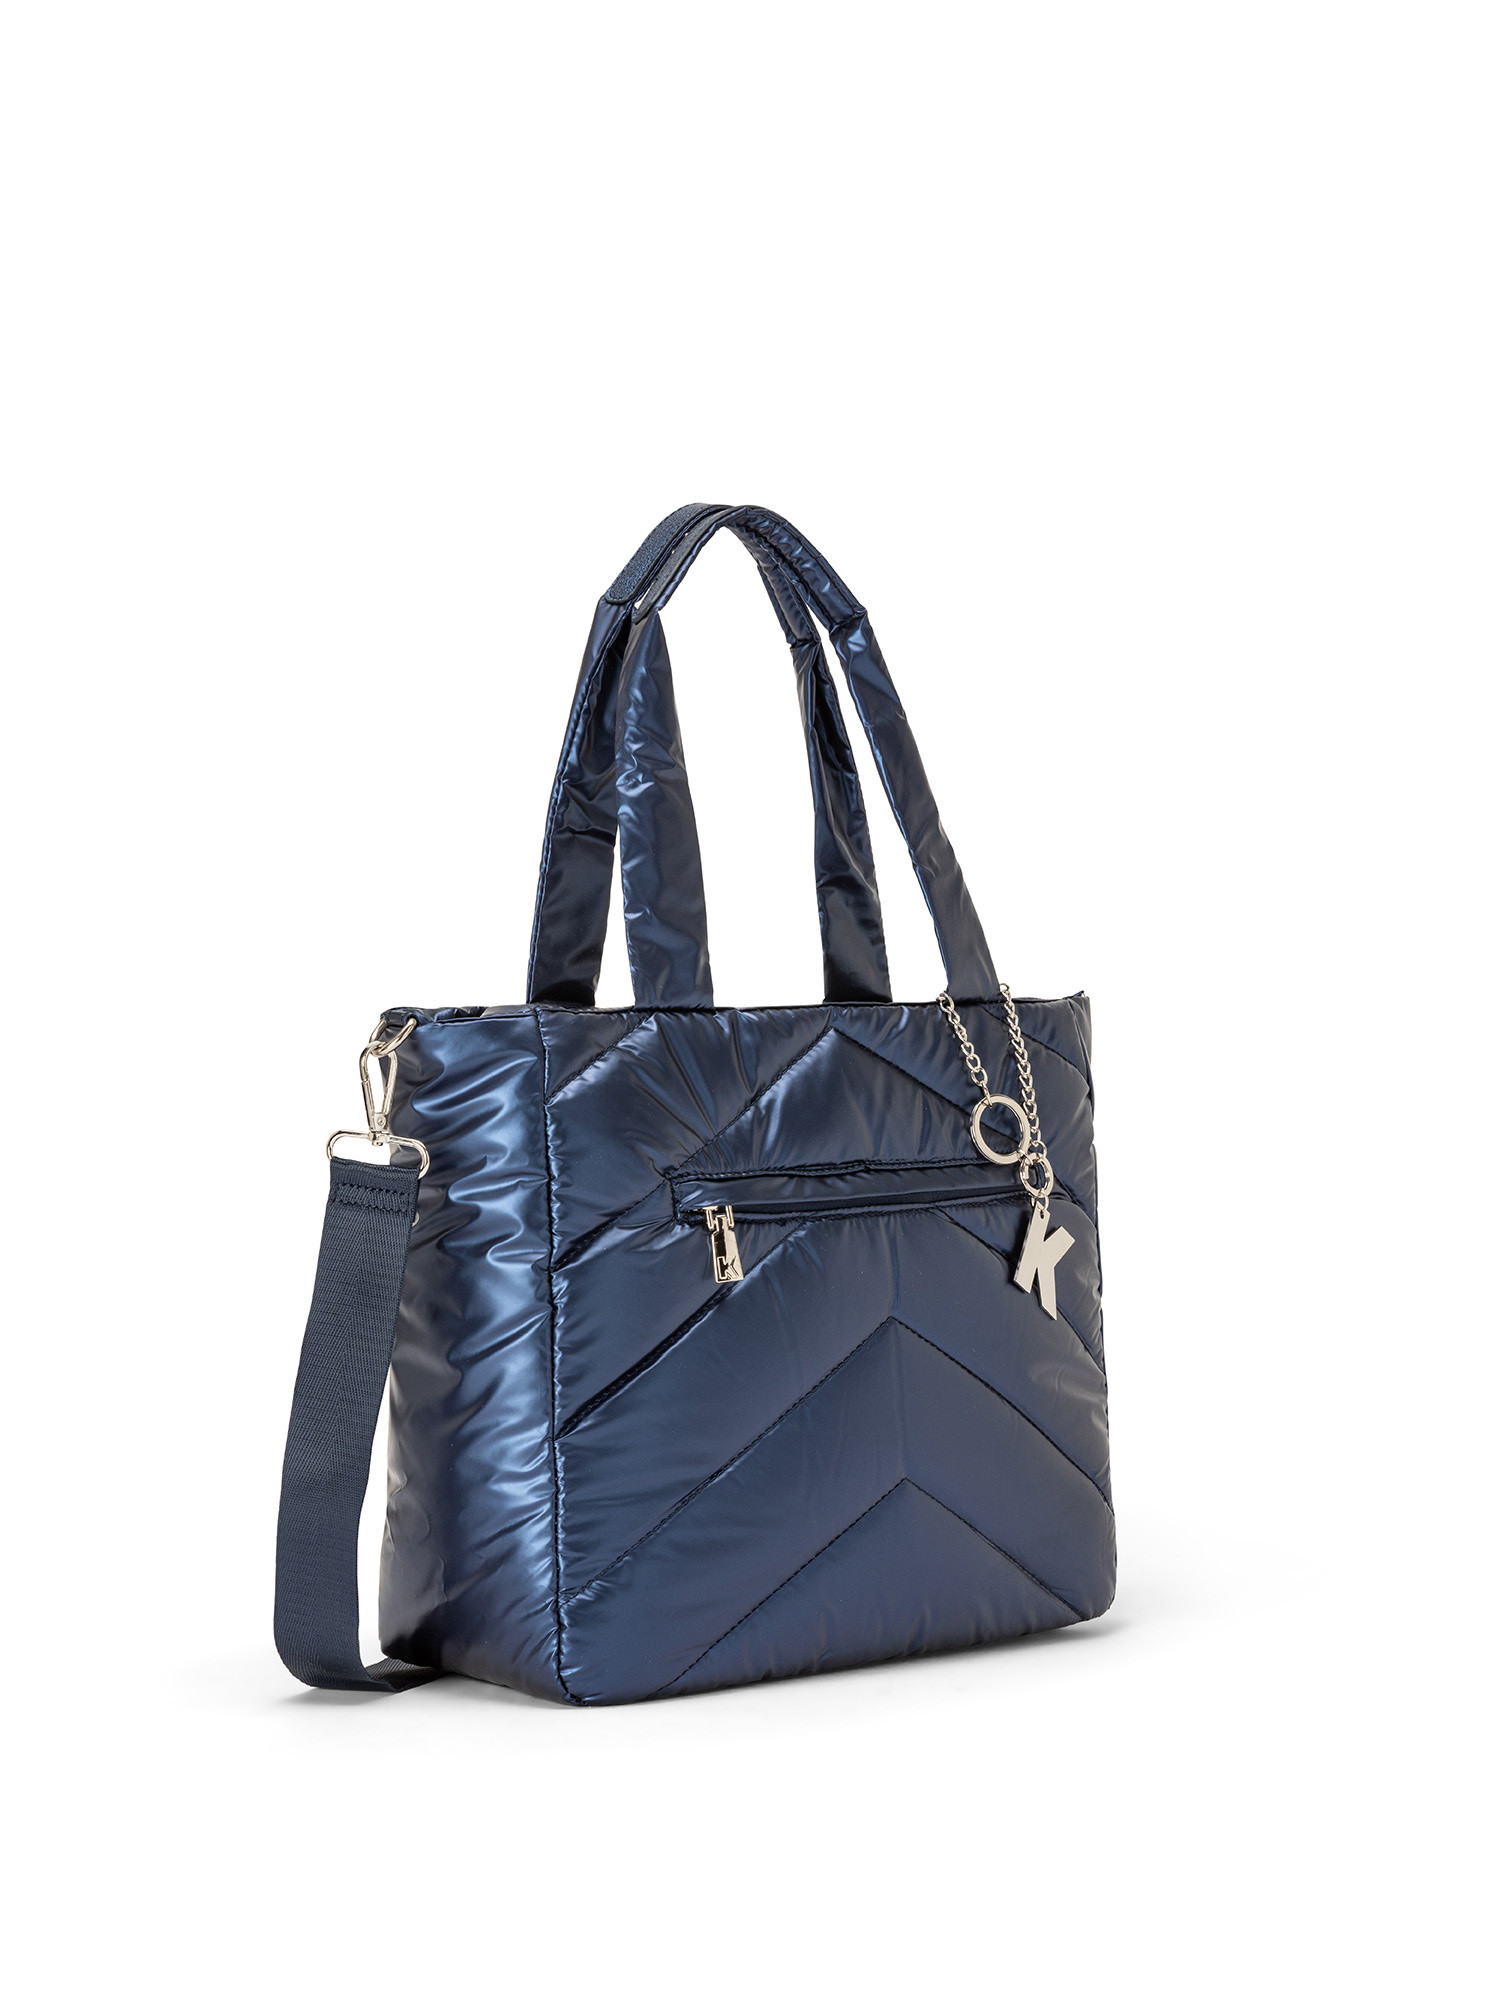 Koan - Nylon shopping bag, Blue, large image number 1